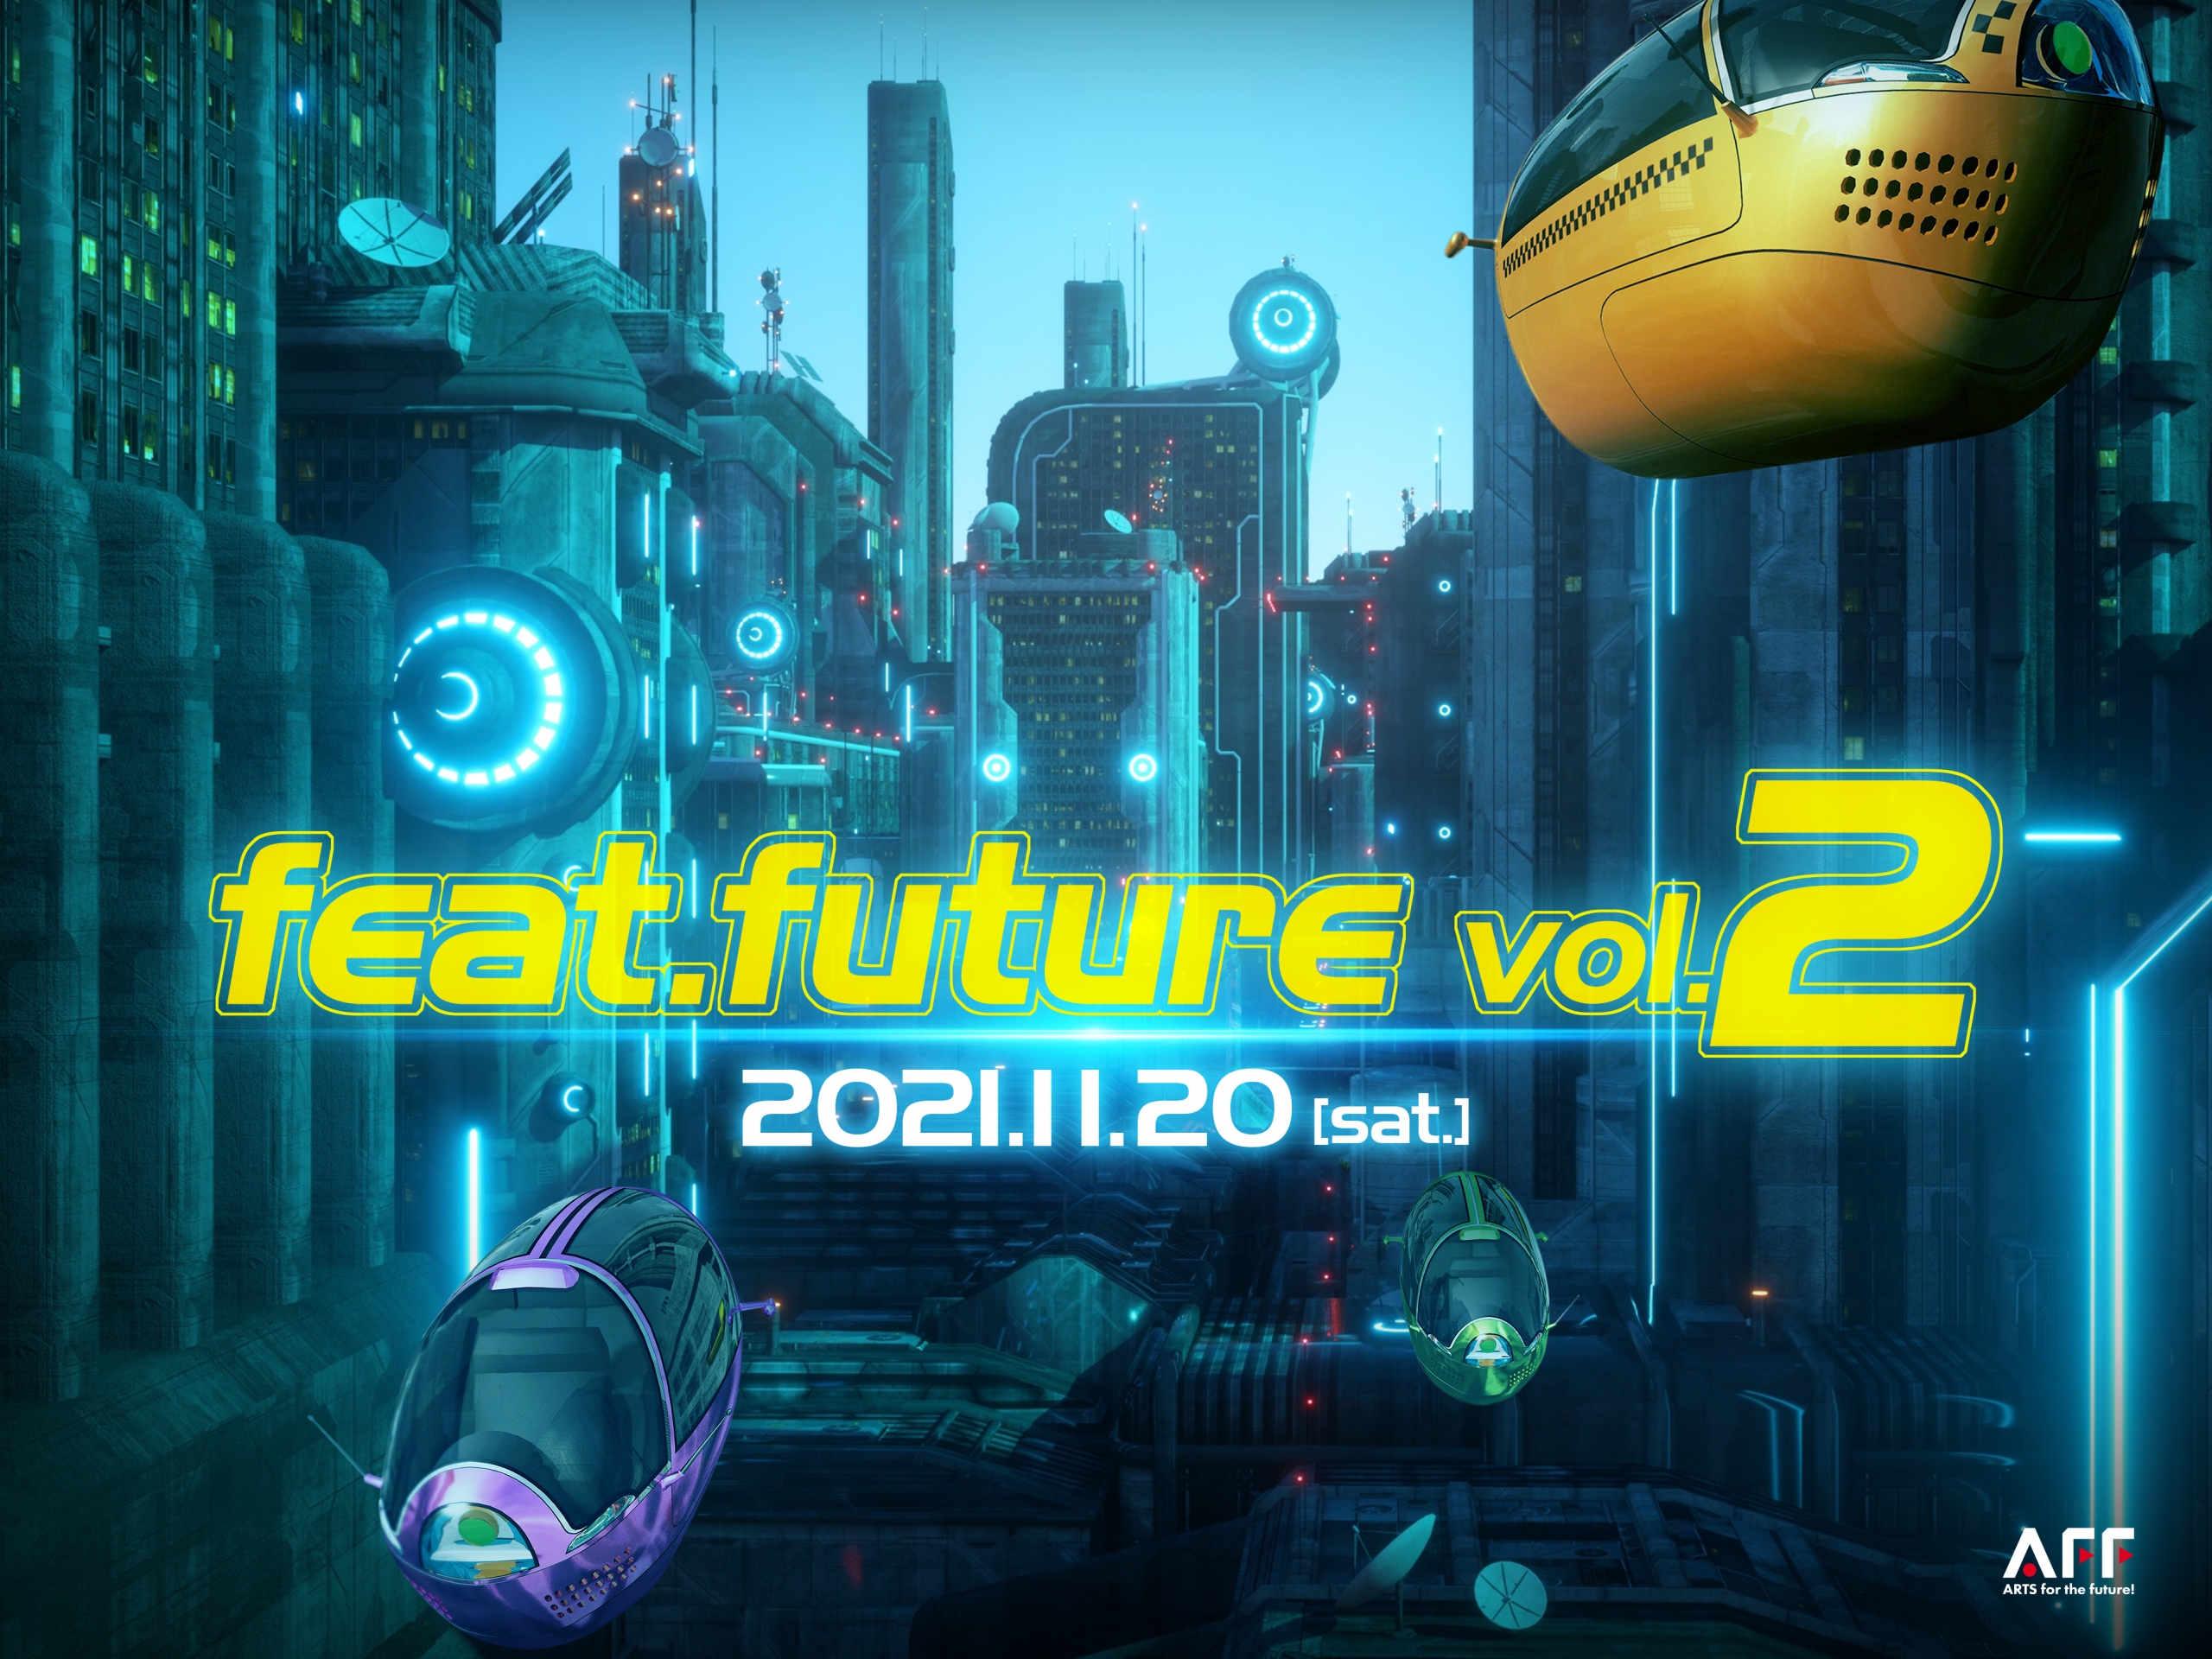 「feat. future vol.2」 にAyumu Imazuの出演が決定!